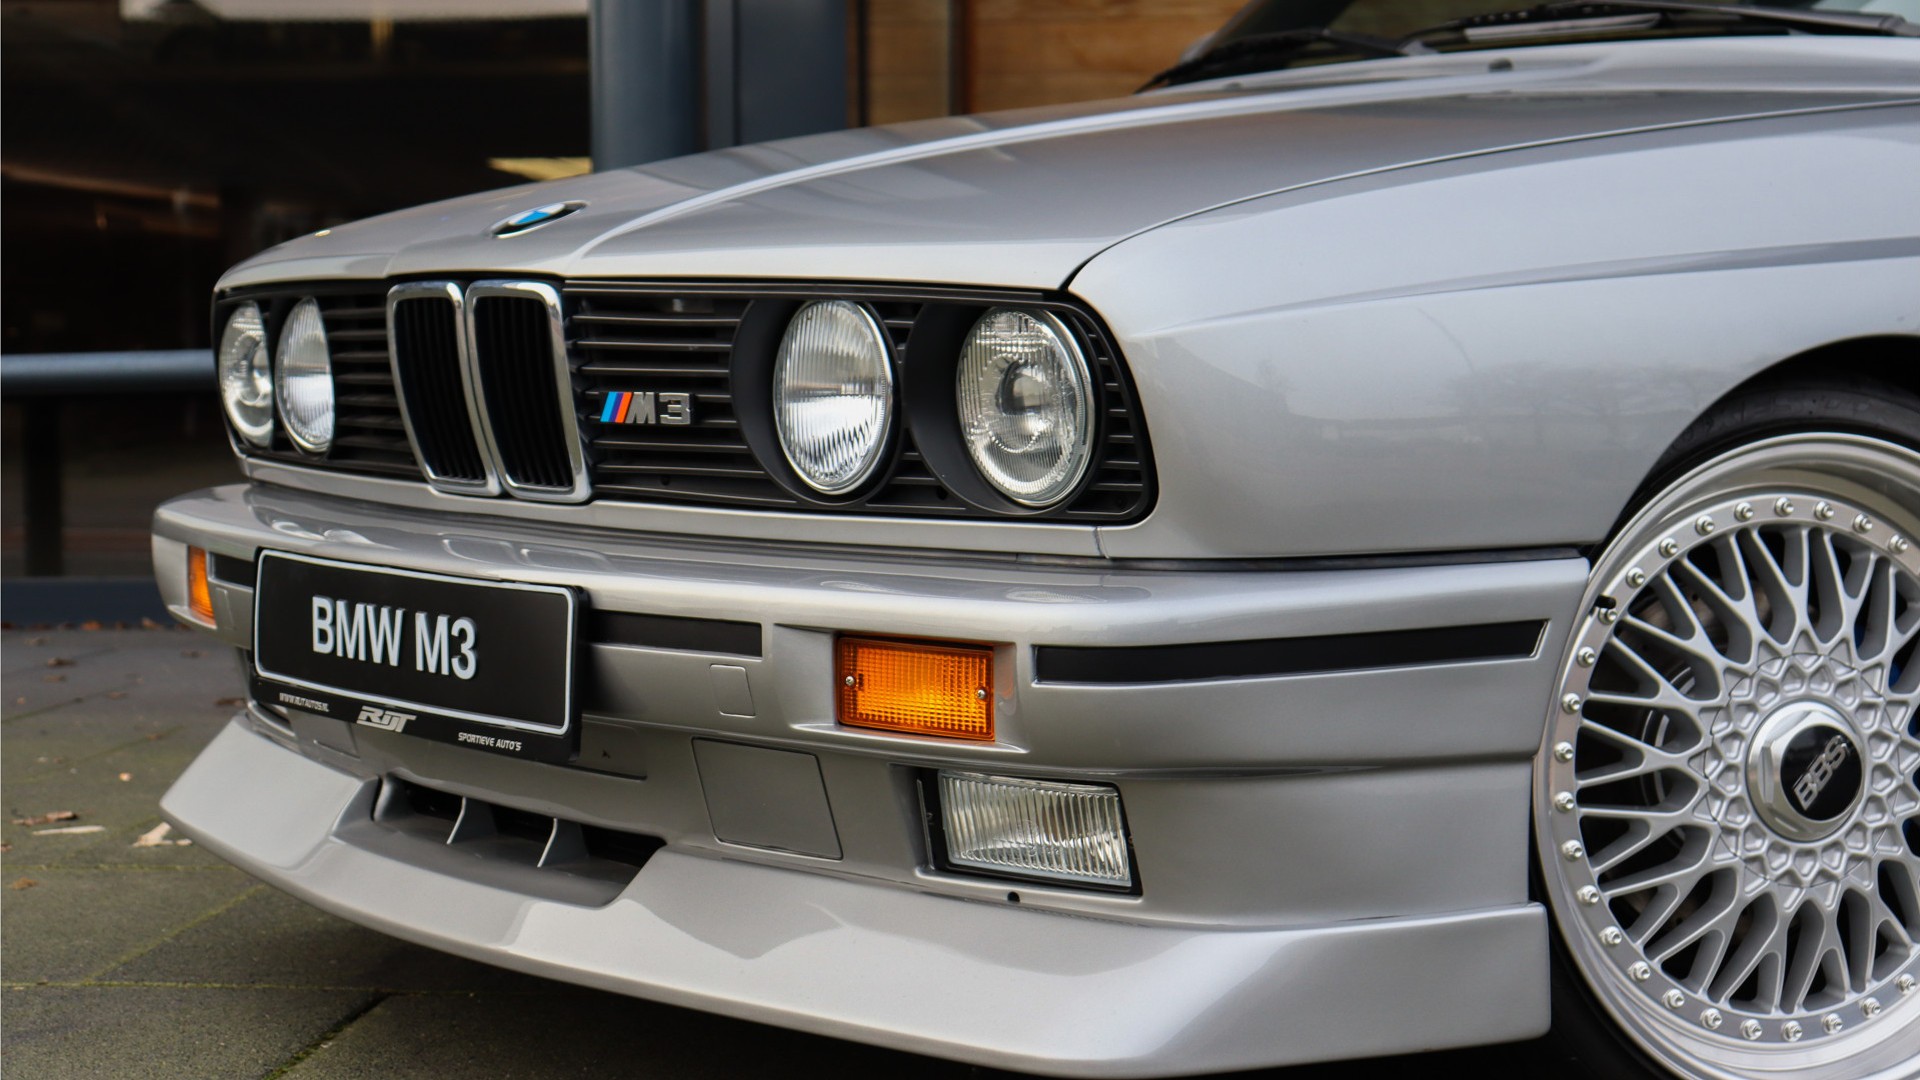 Deze occasion wil je: BMW E30 M3, een rijdende legende!